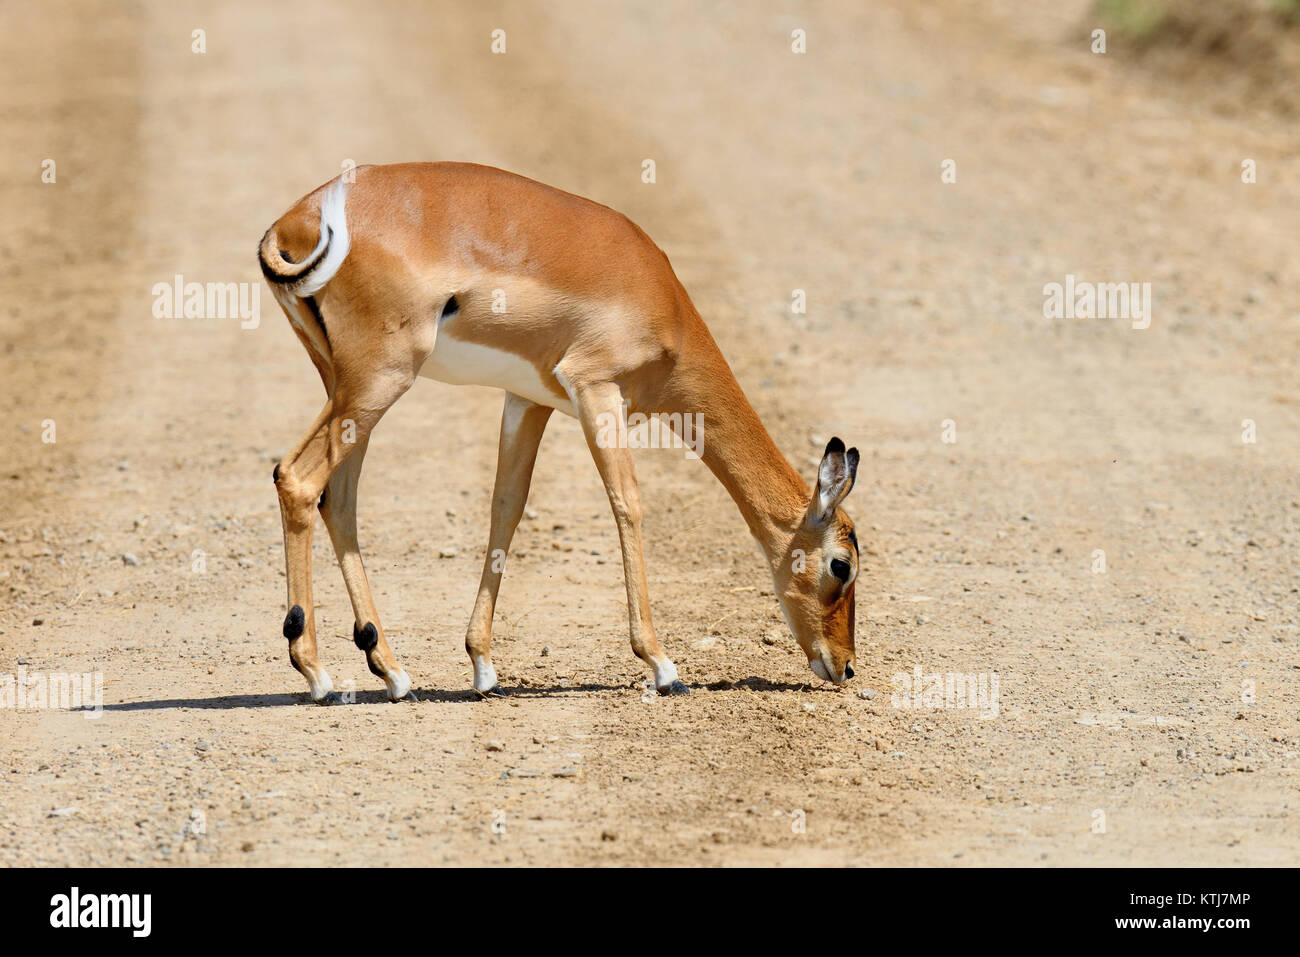 Impala on savanna in National park of Africa, Kenya Stock Photo